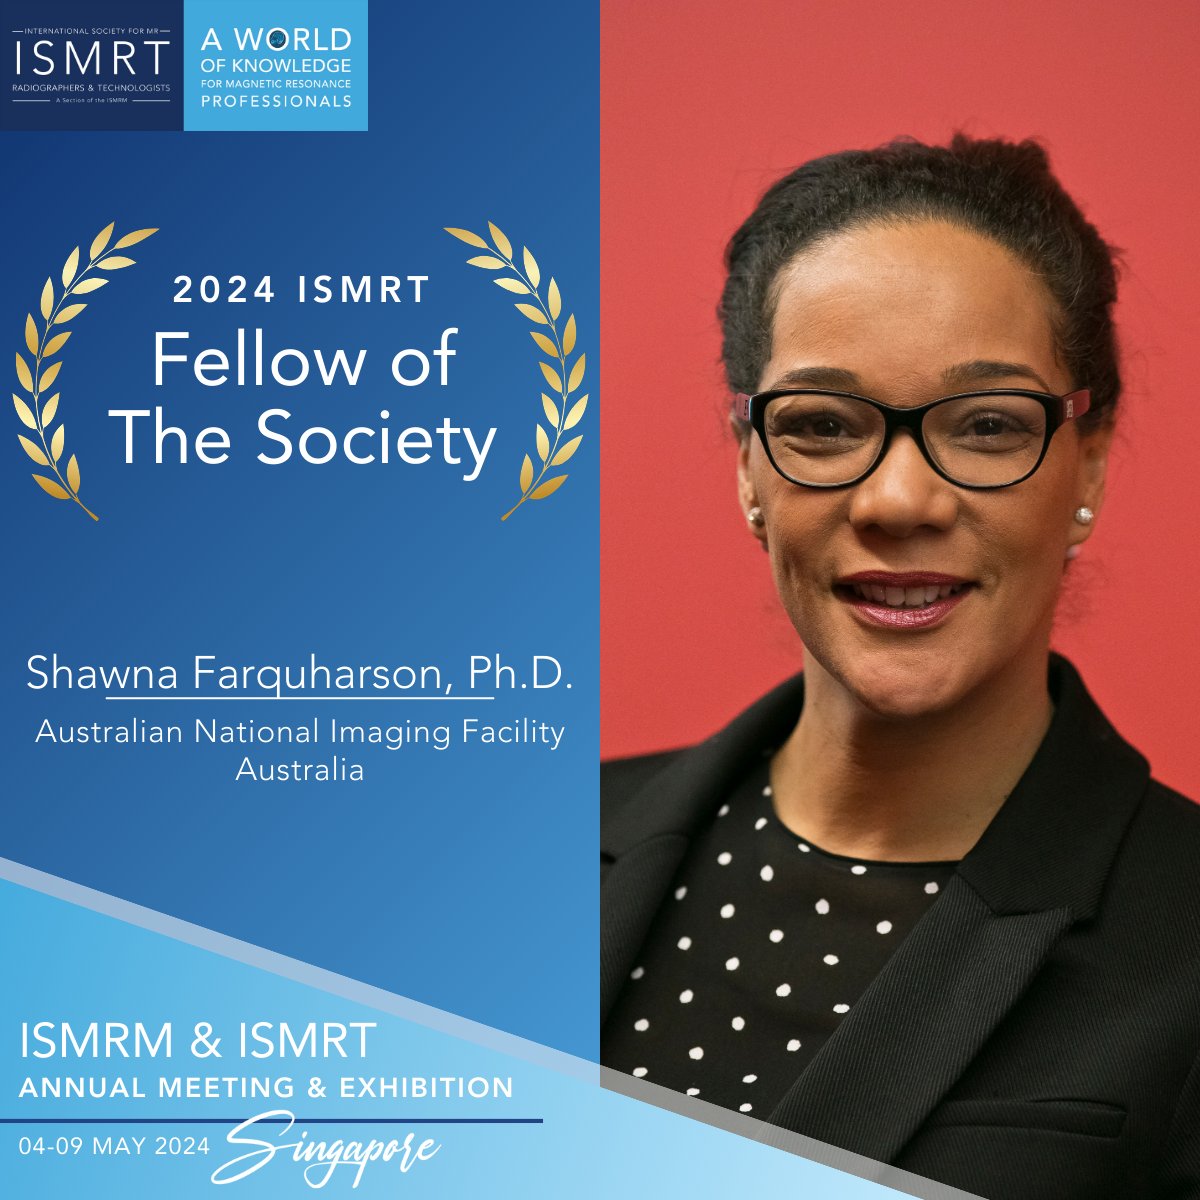 Congratulations again to 2024 ISMRT Fellow of the Society Award recipient, Shawna Farquharson, Ph.D.!

#ISMRT2024 #ISMRM2024 #ISMRT #ISMRM #MRI #MR #MagneticResonance #Singapore